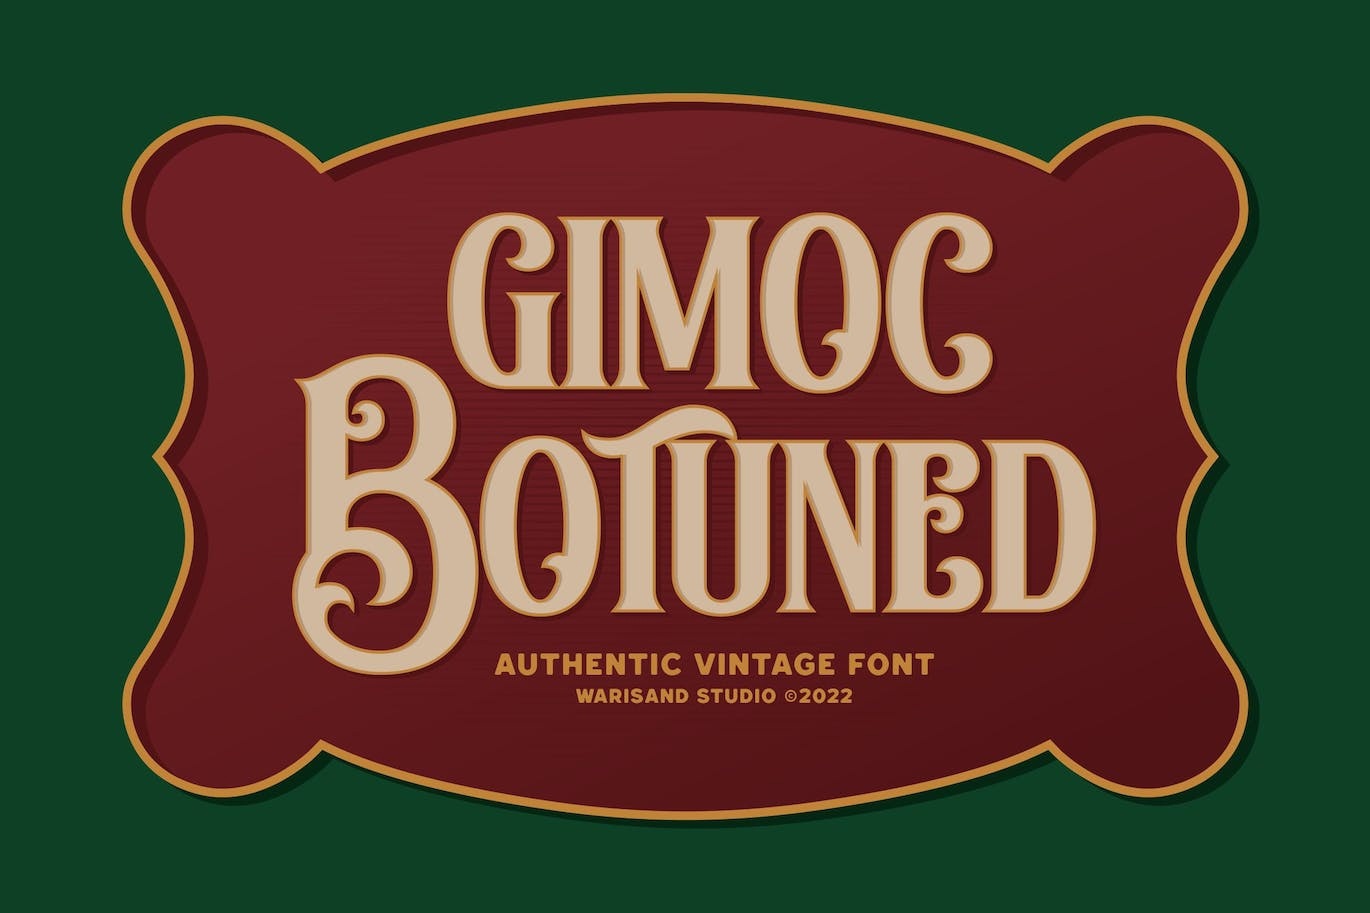 Przykład czcionki Gimoc Botuned